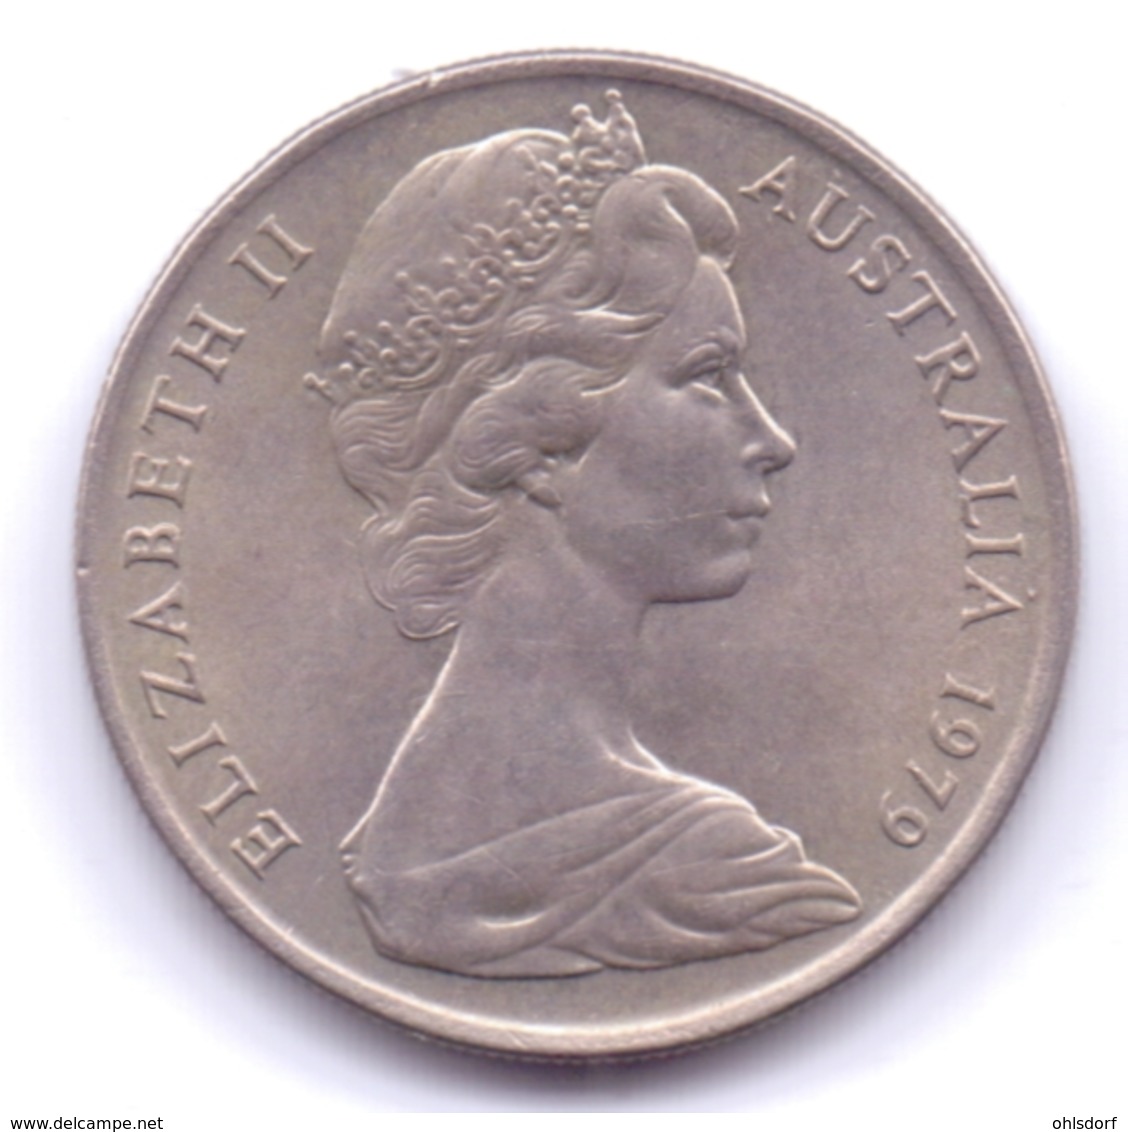 AUSTRALIA 1979: 10 Cents, KM 65 - 10 Cents